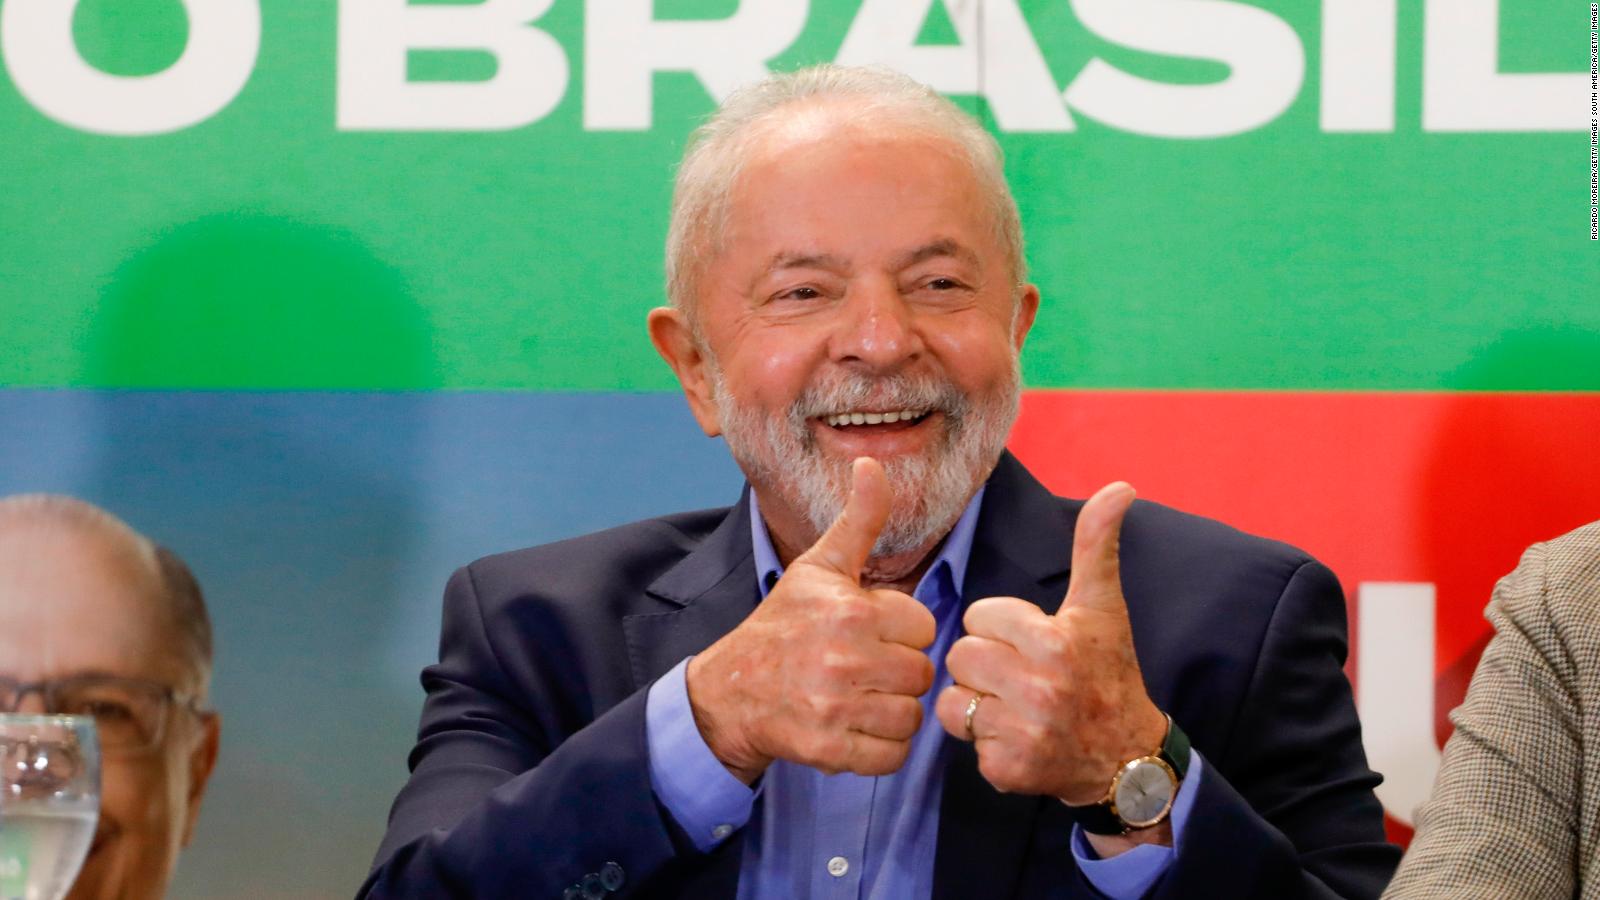 What Will The New Government Of Luiz Inácio Lula Da Silva Look Like?